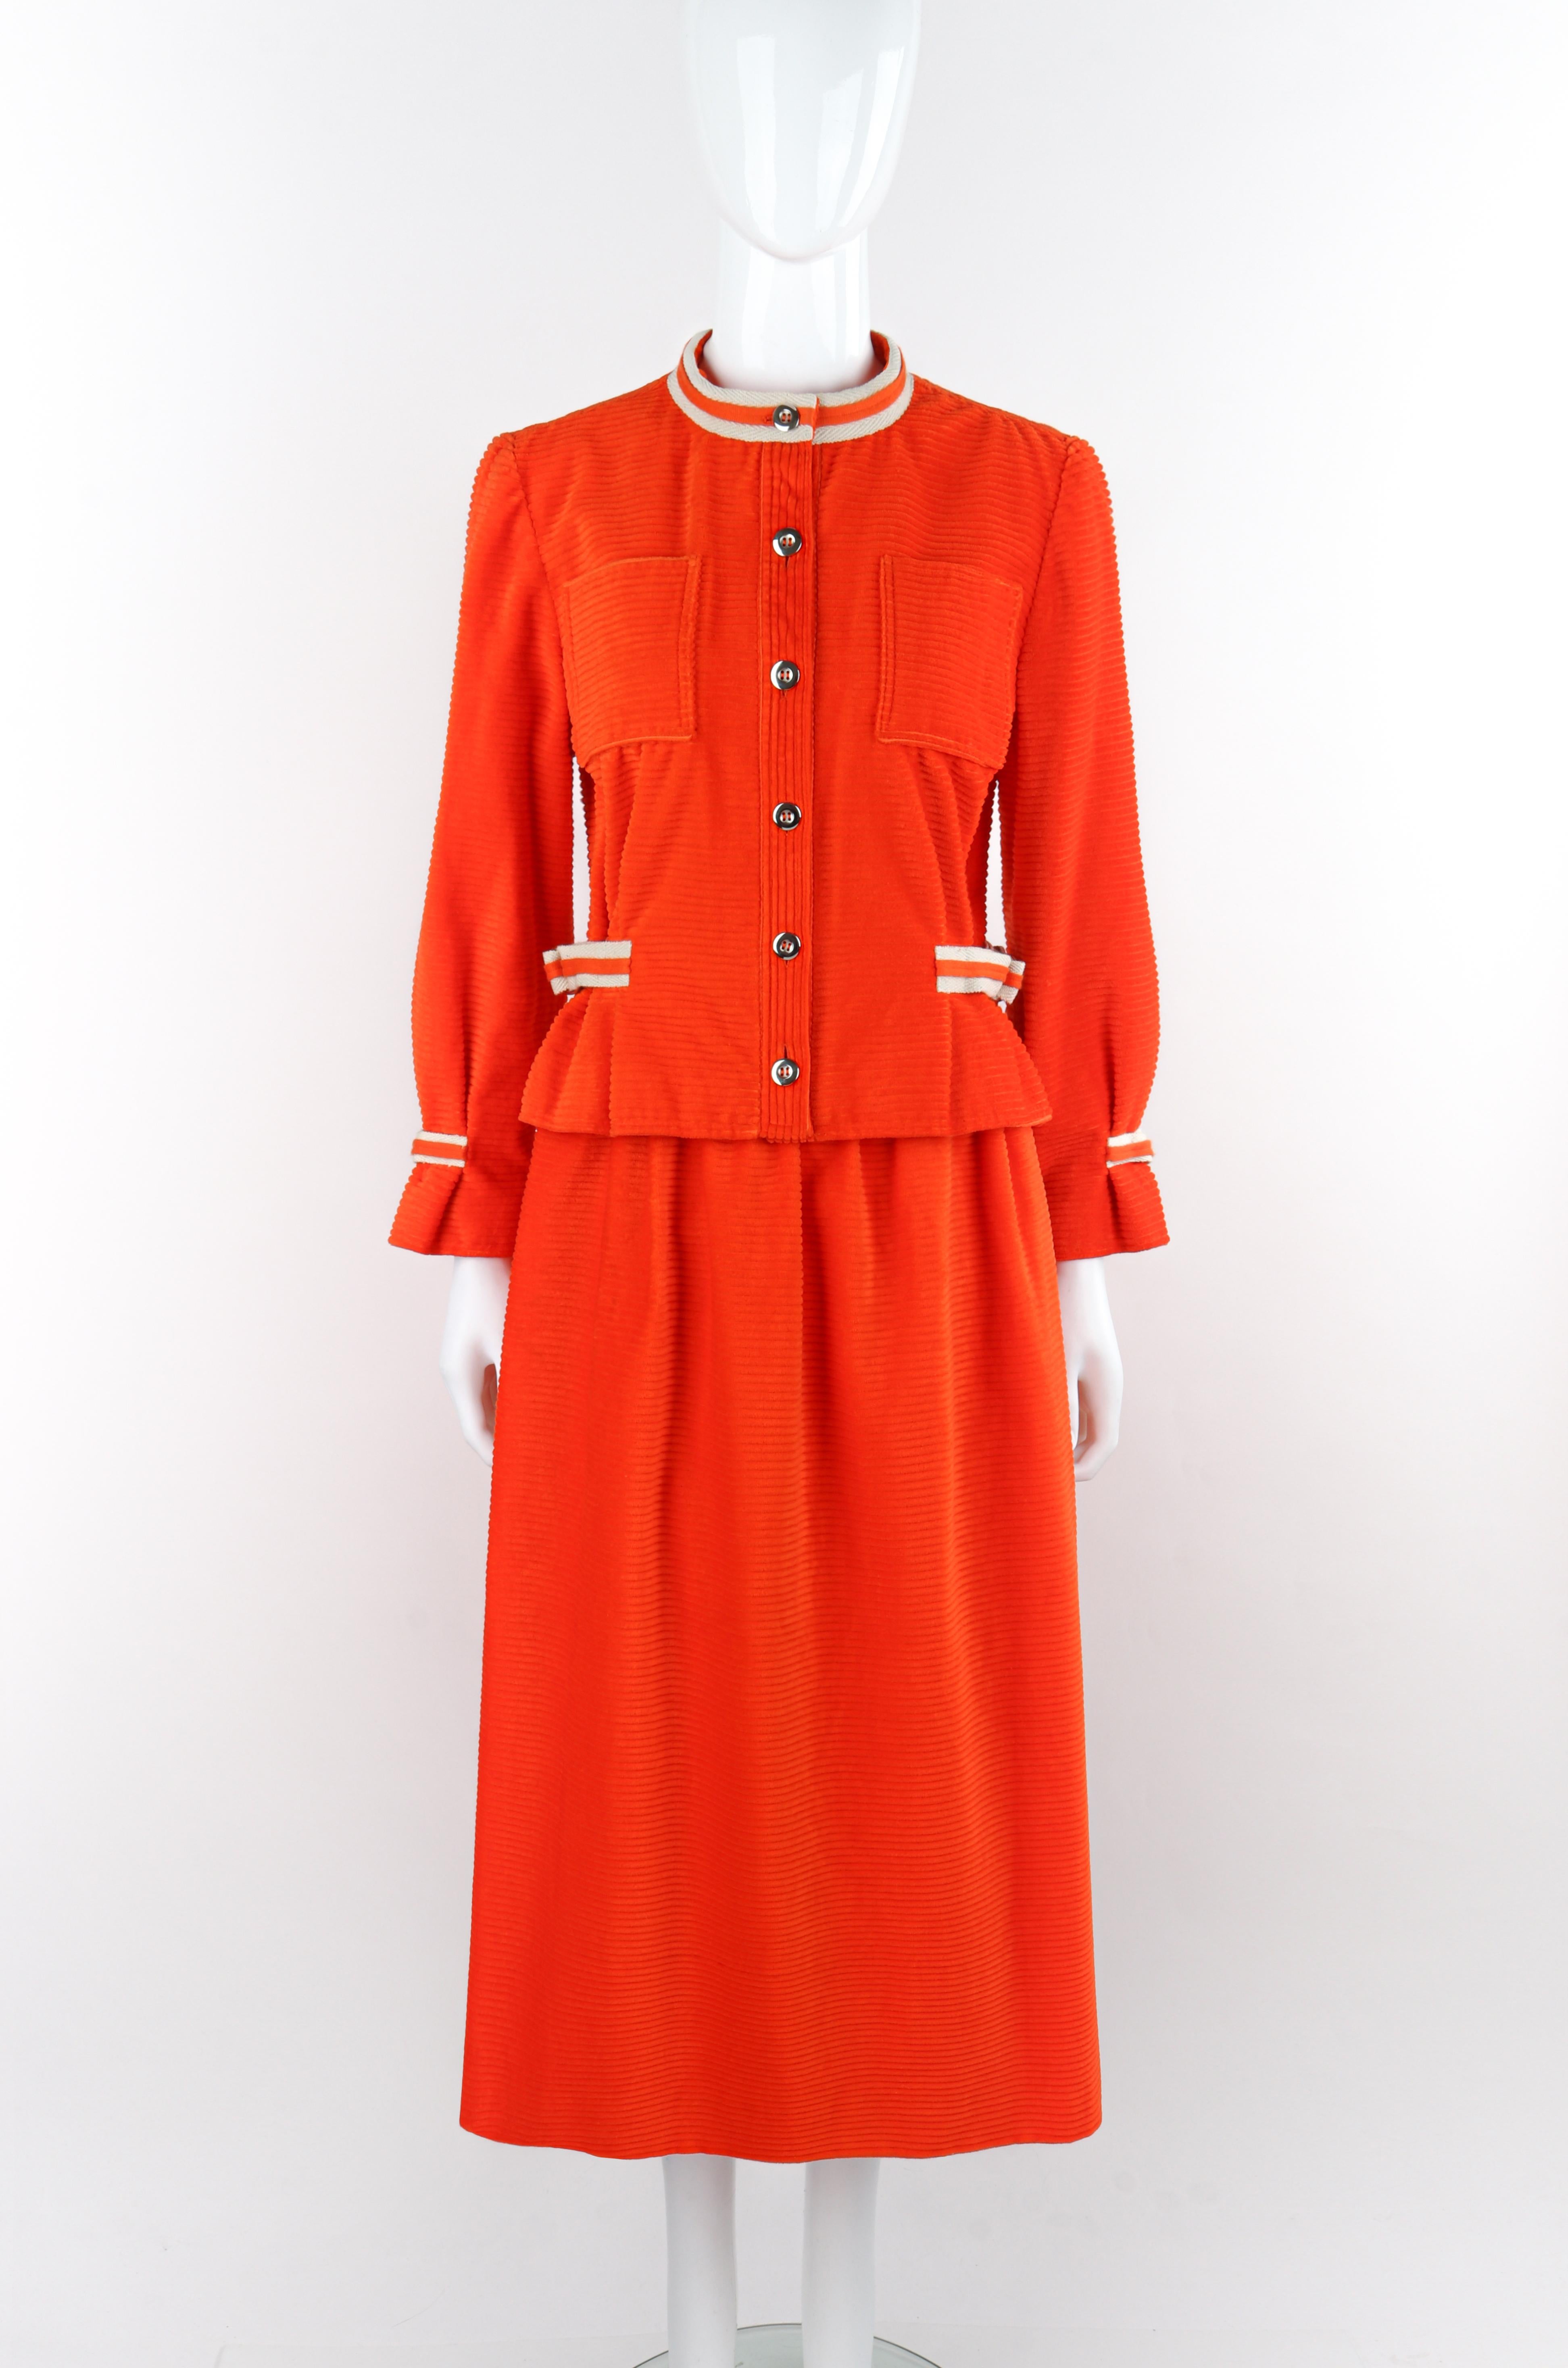 COURREGES c. 1970's Orange Corduroy Button Up Jacket Blazer Skirt Suit Set VTG

Brand / Manufacturer: Courreges
Circa: 1970s
Designer: Andre Courreges
Style: Jacket Skirt Suit Set
Color(s): Orange, White (detailing), Silver (buttons)
Lined: